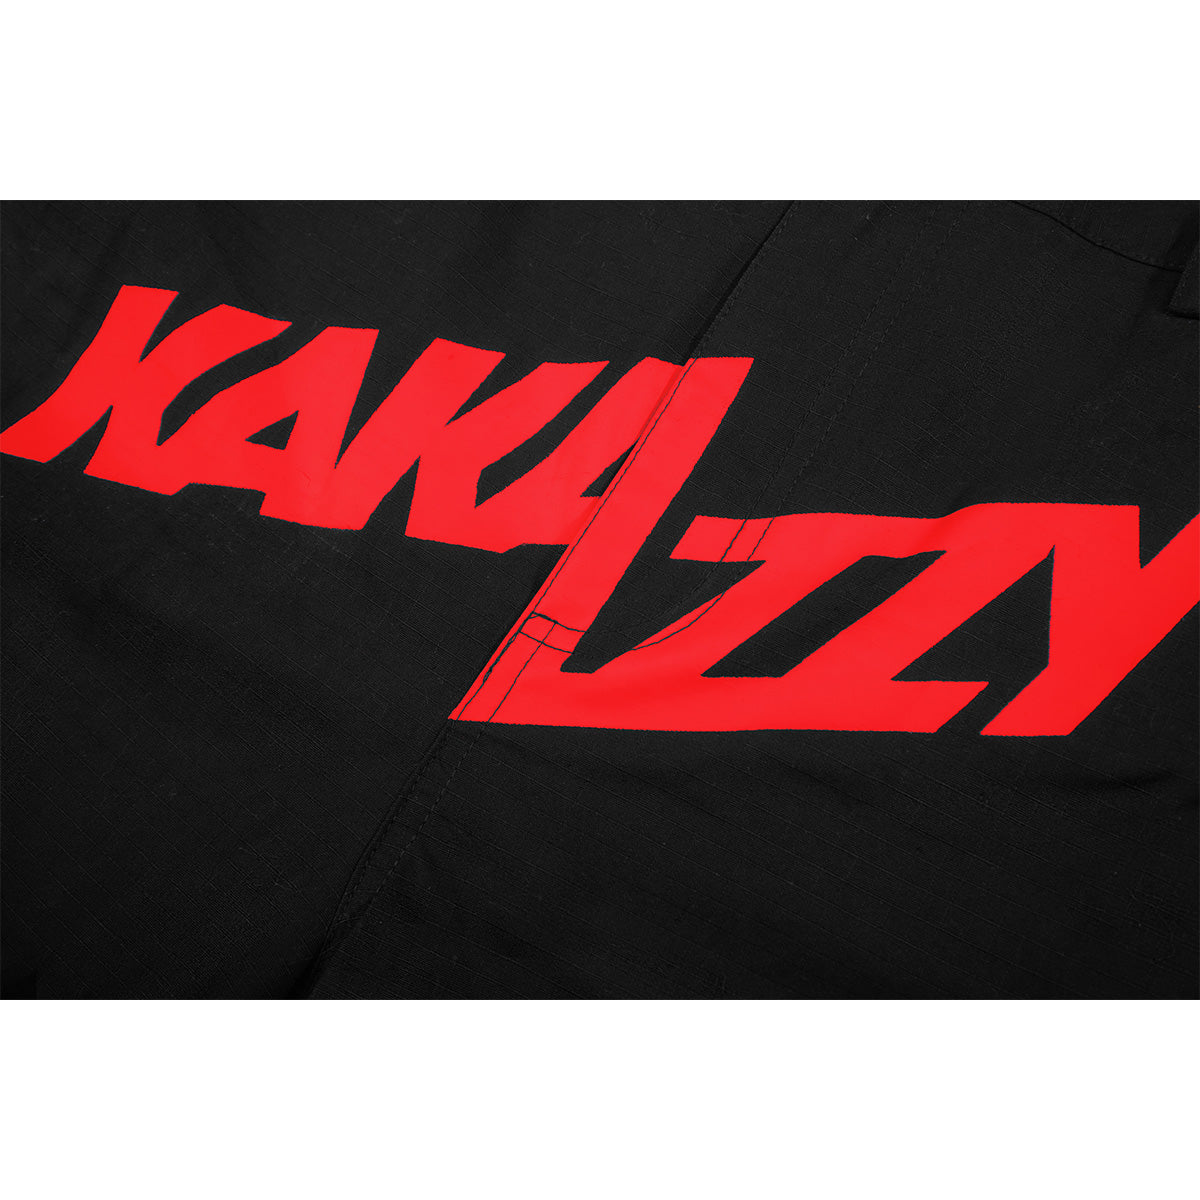 Kakazzy Cargos Black Red